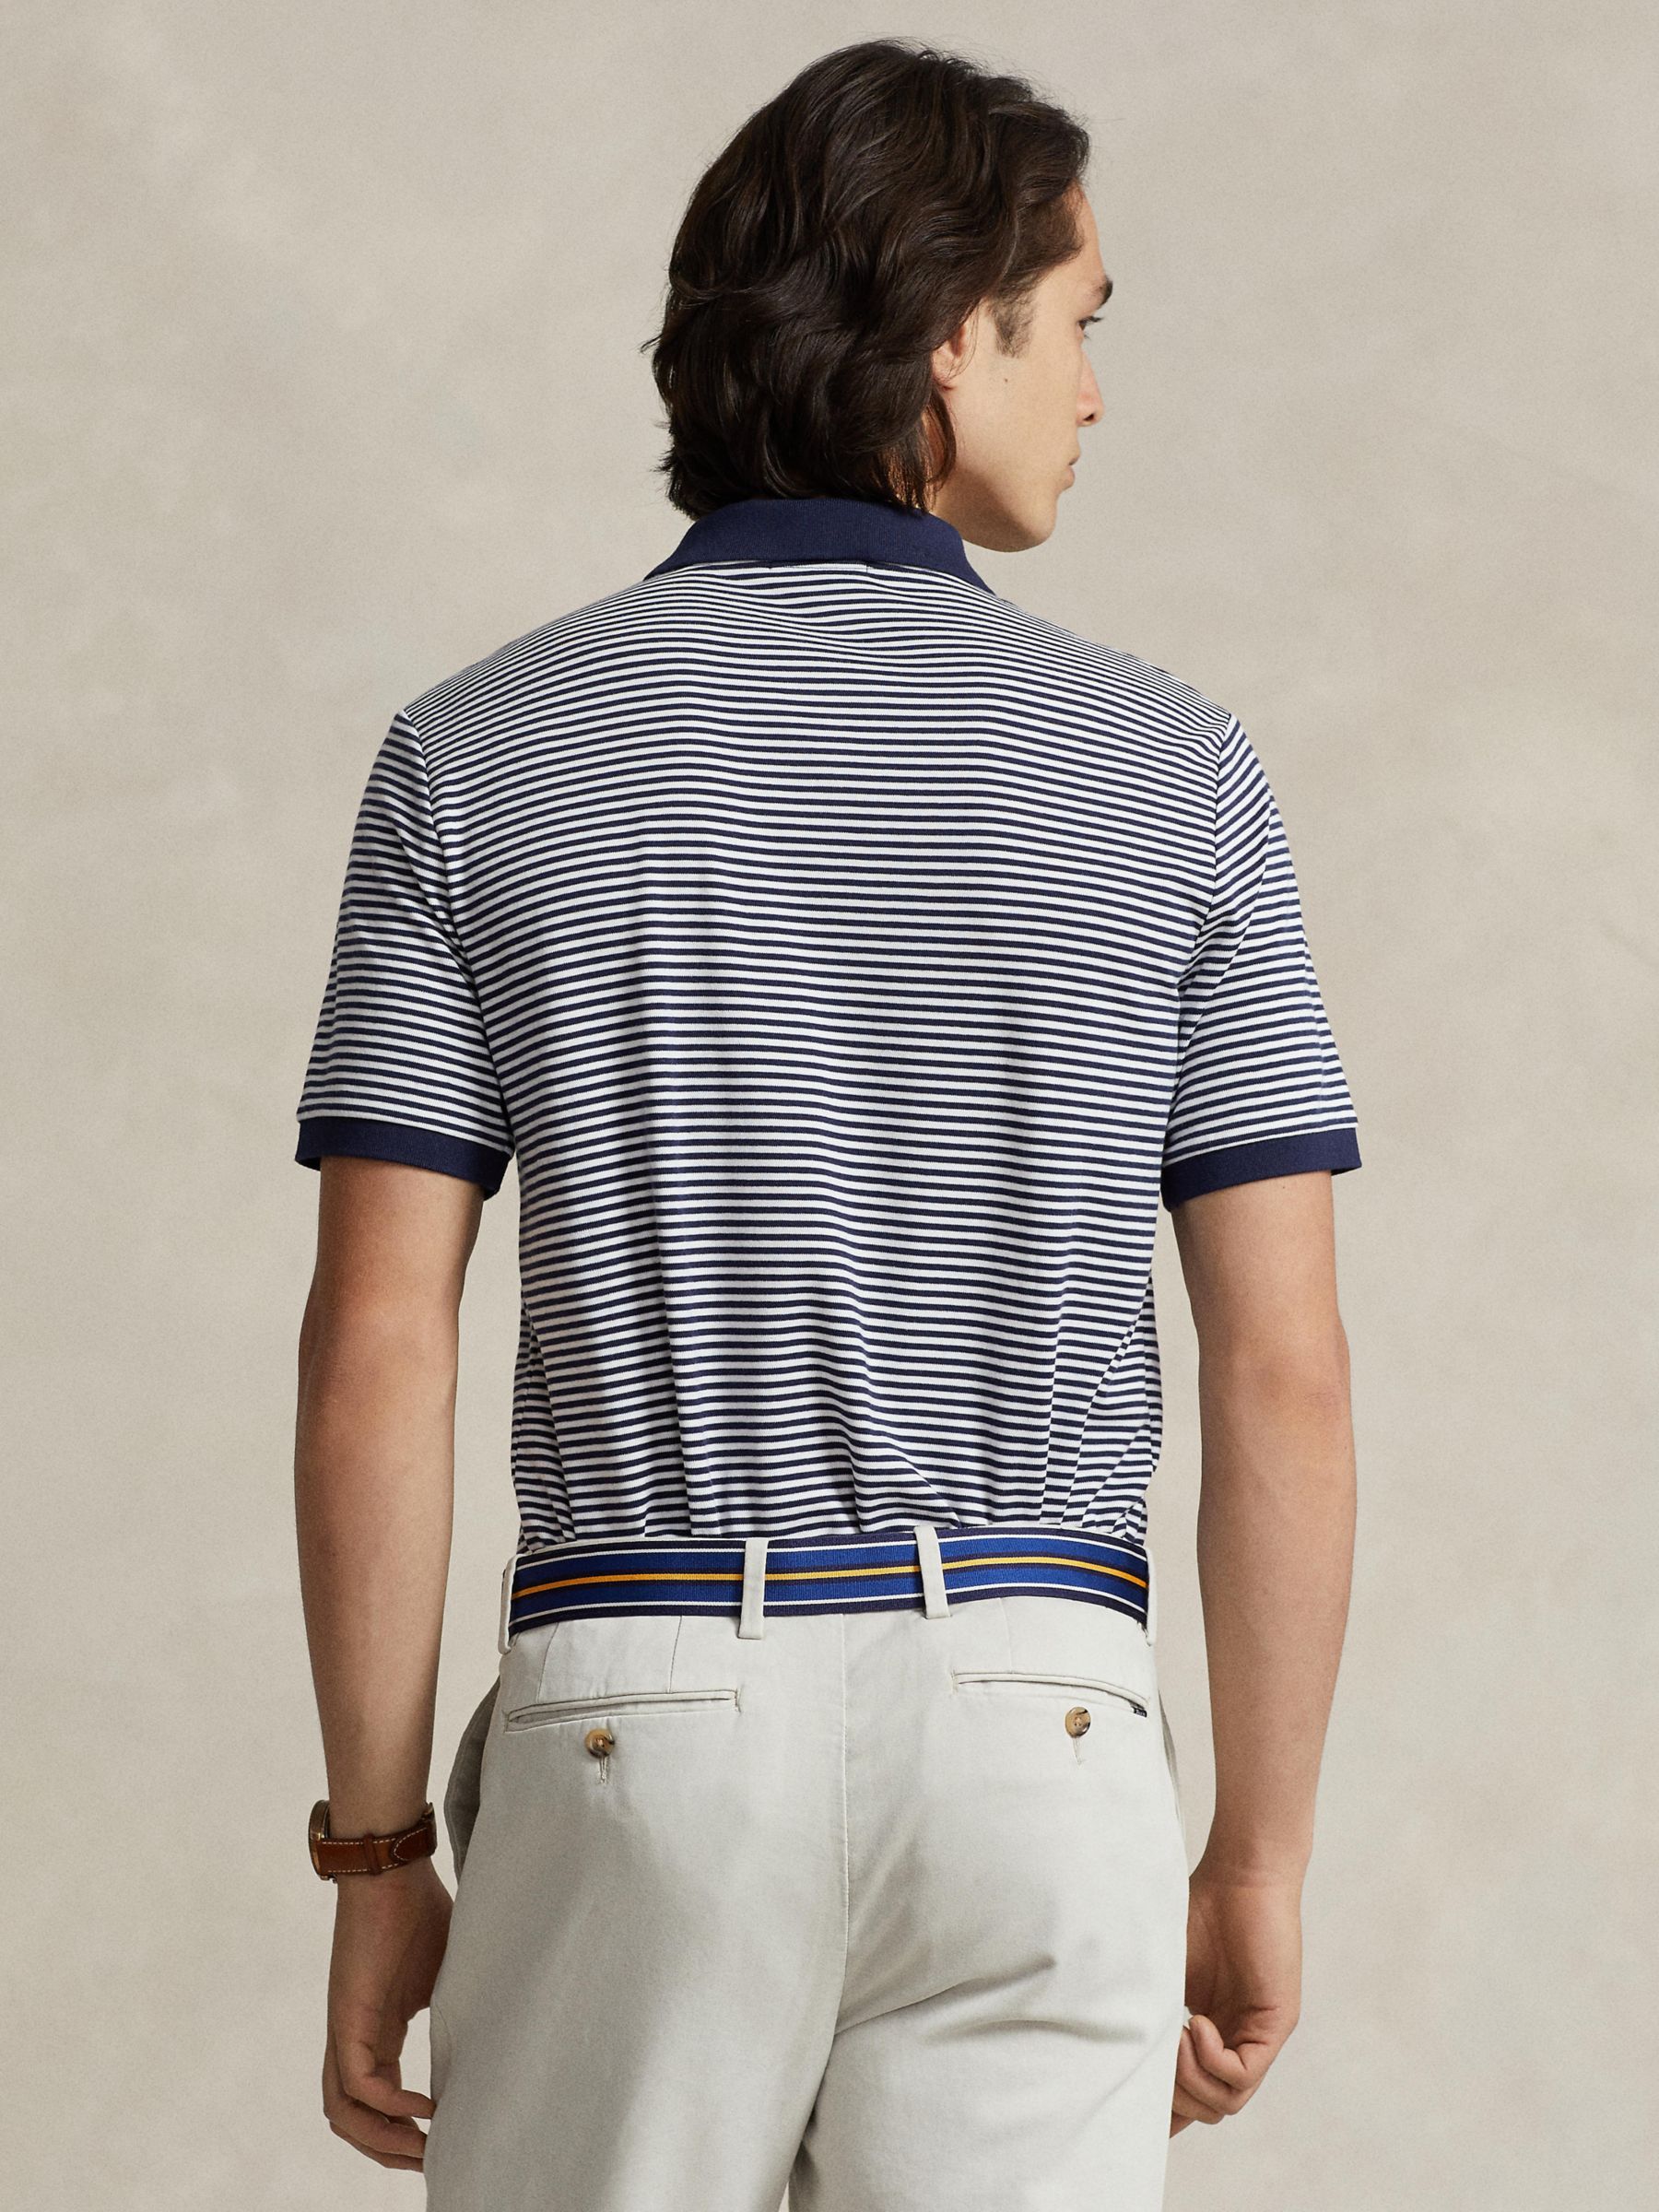 Polo Ralph Lauren Short Sleeve Striped Polo Shirt, Refined Navy/White, S